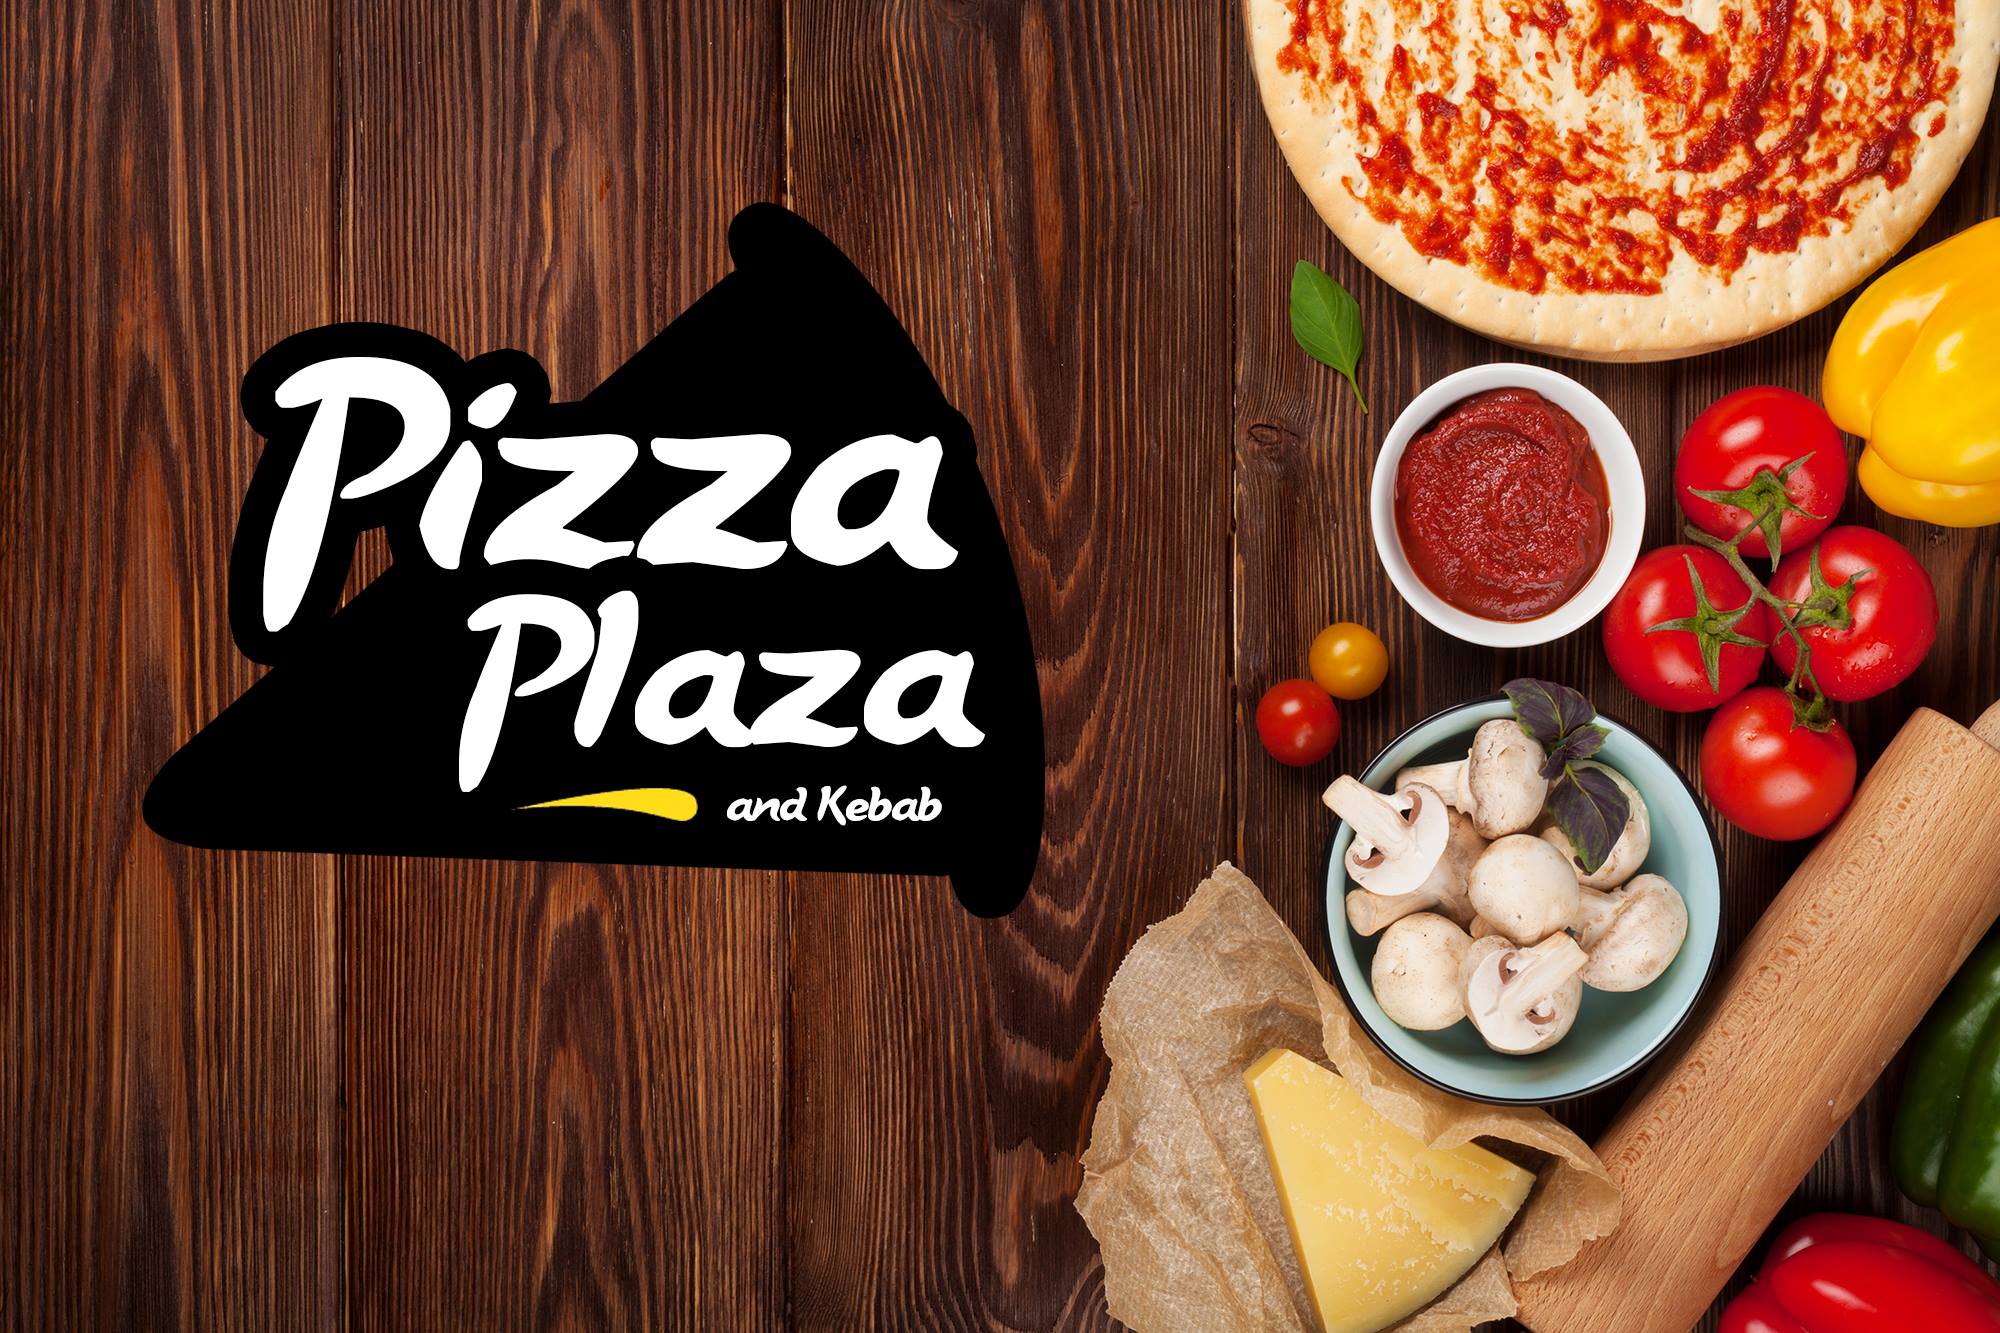 Pizza Plaza & Kebab